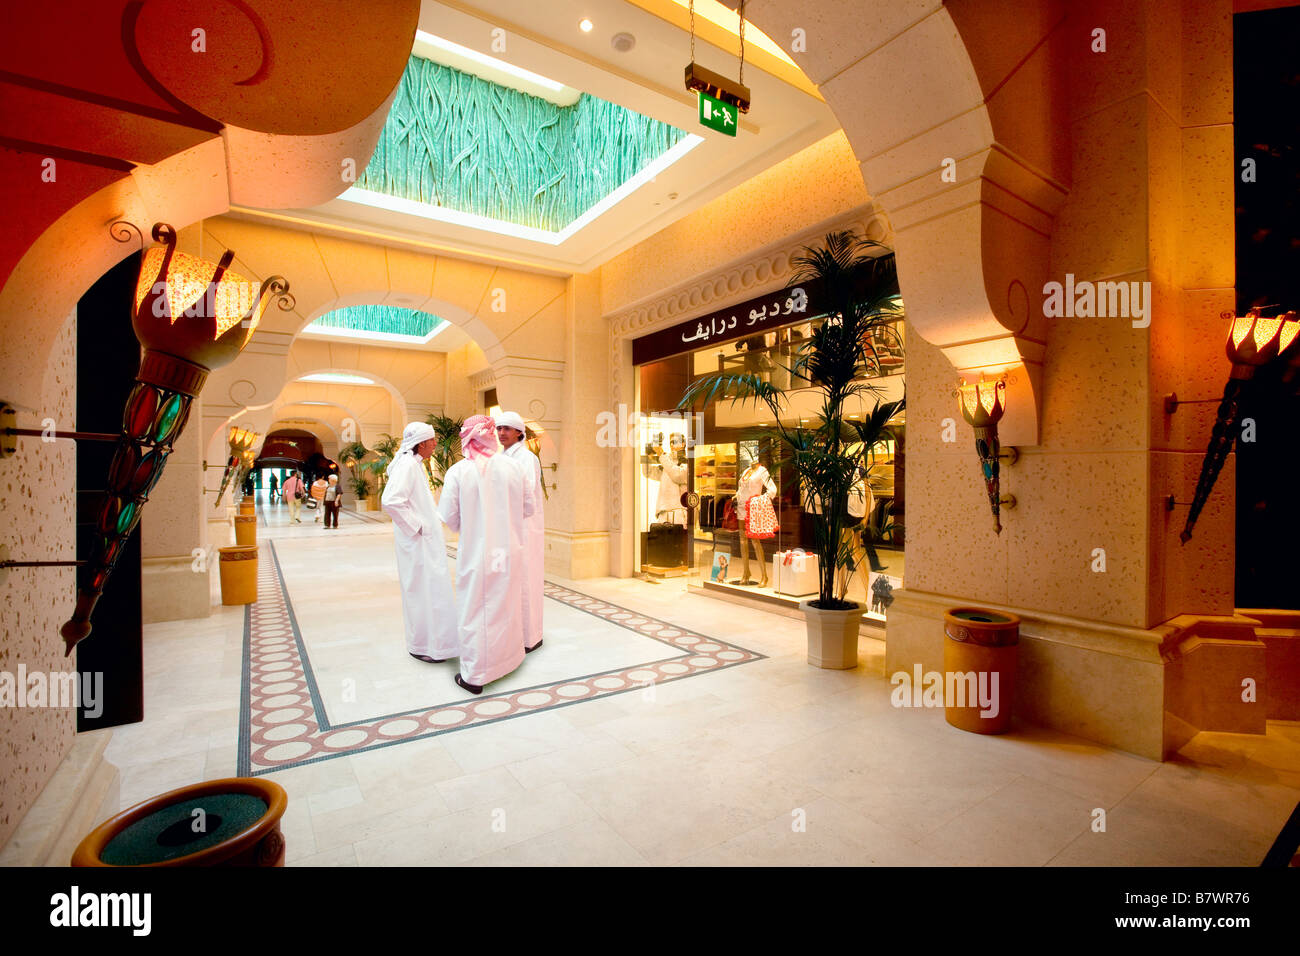 Interior of the Atlantis hotel at Jumeirah Dubai Stock Photo